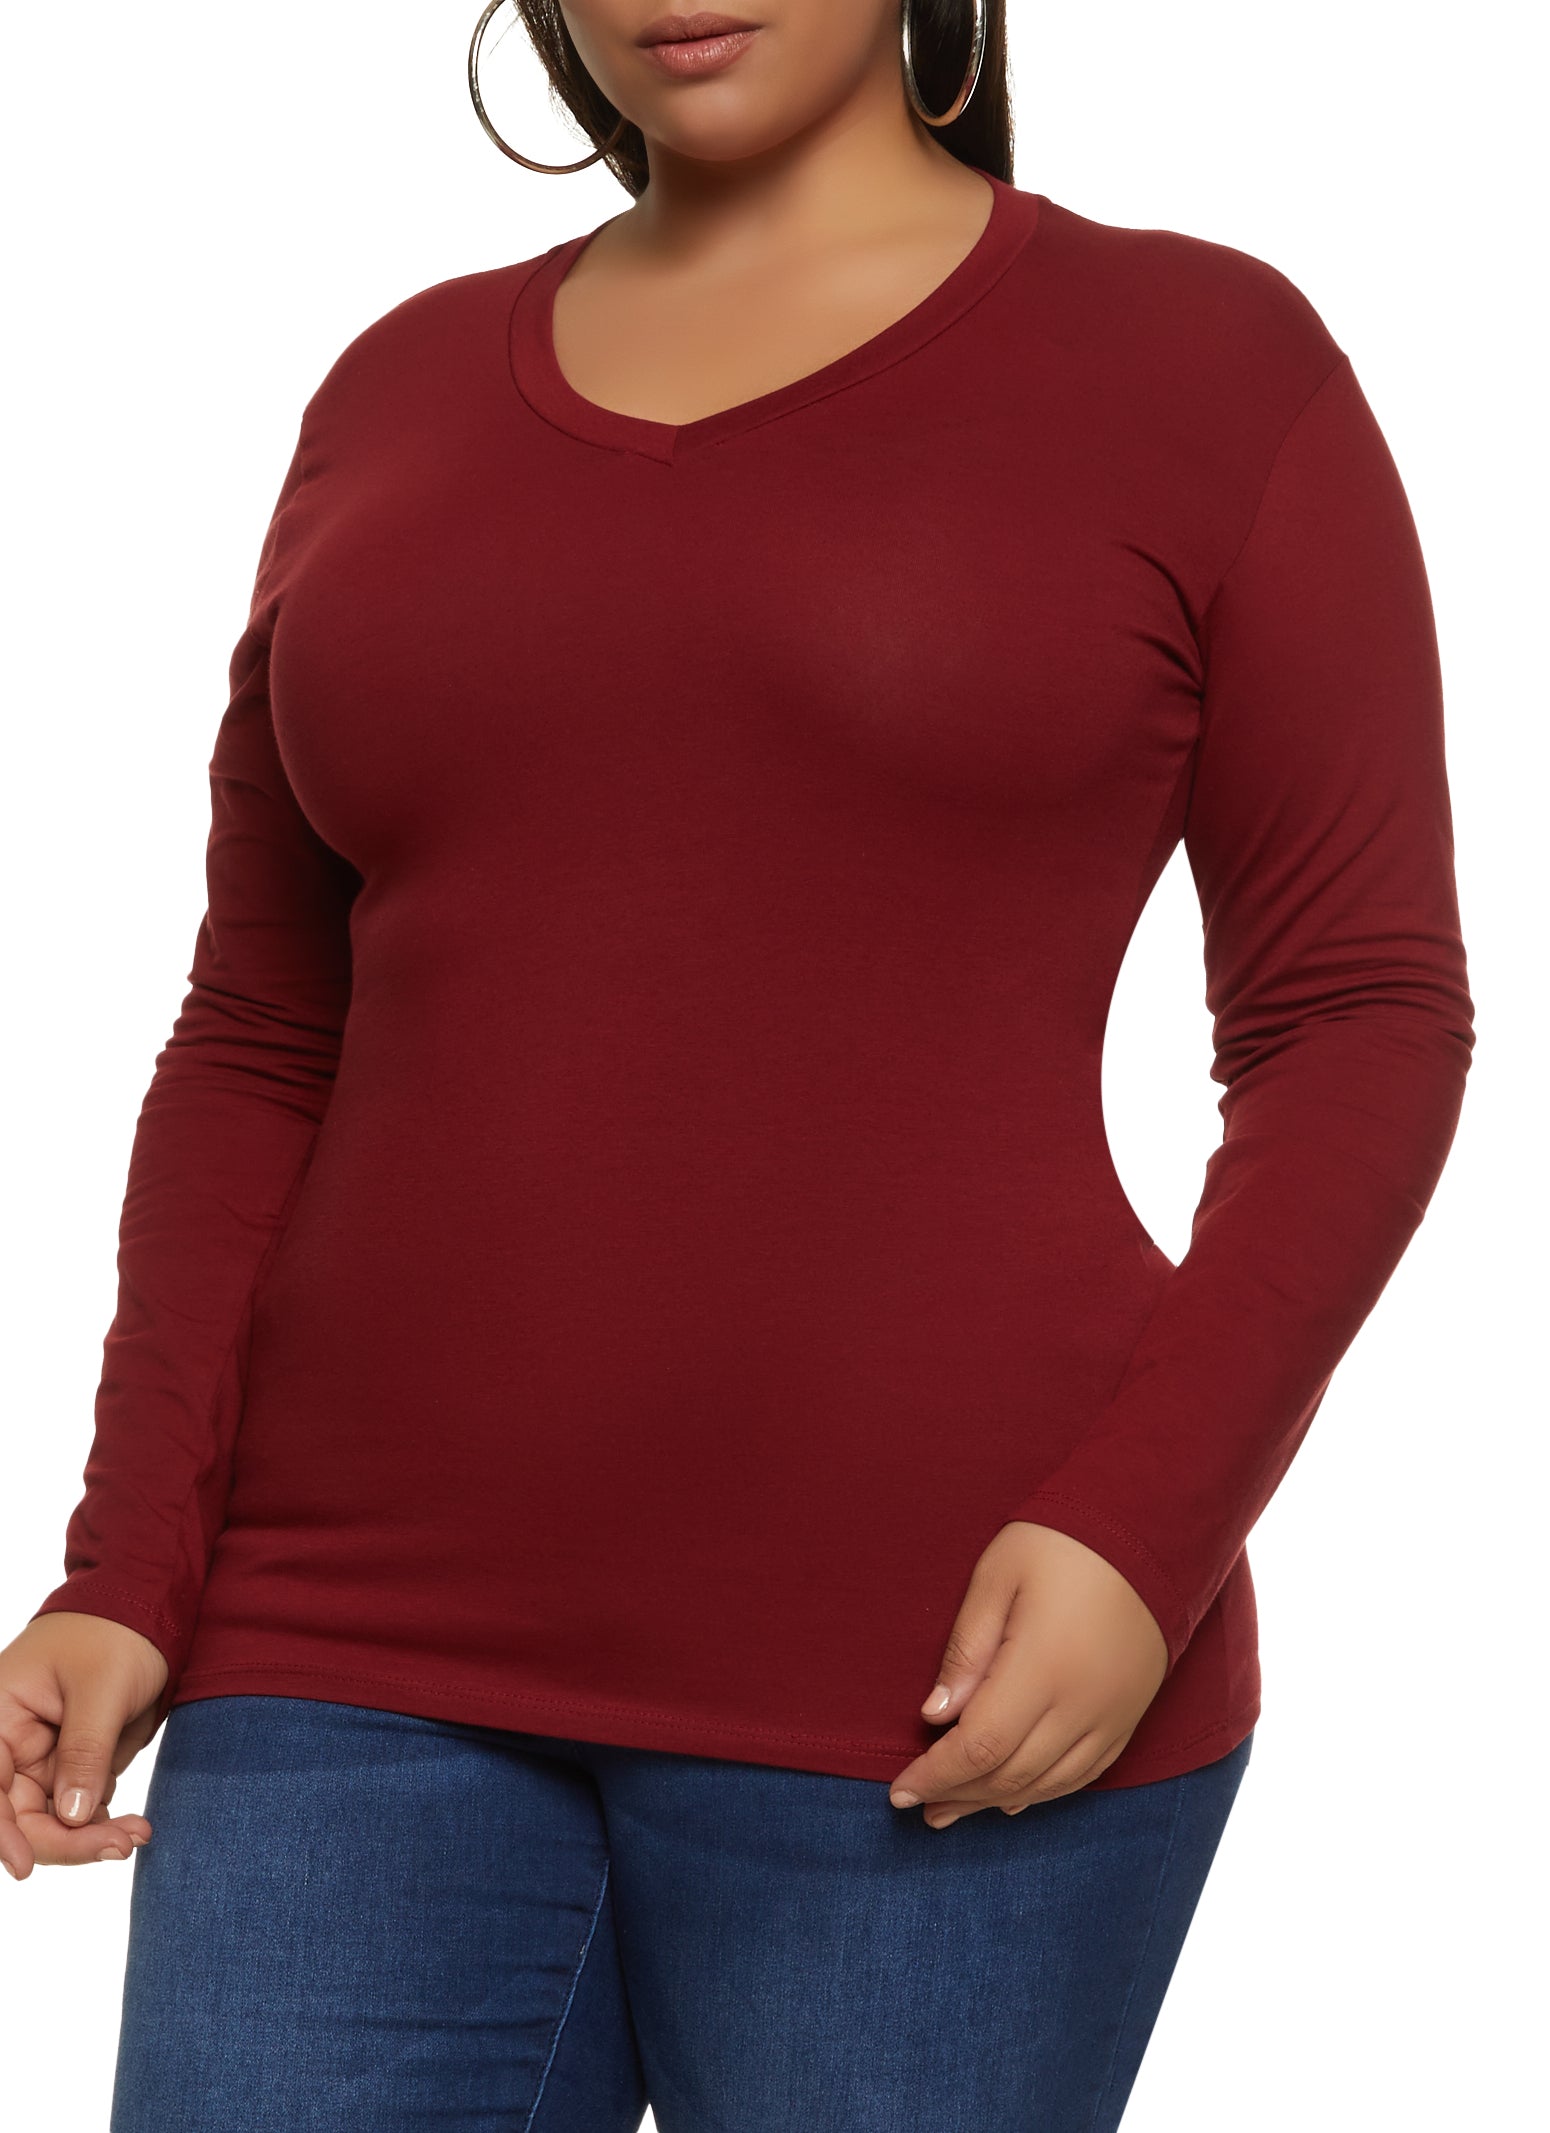 Buy Plain Burgundy Womens Plus Size T-Shirt Online India - Beyoung